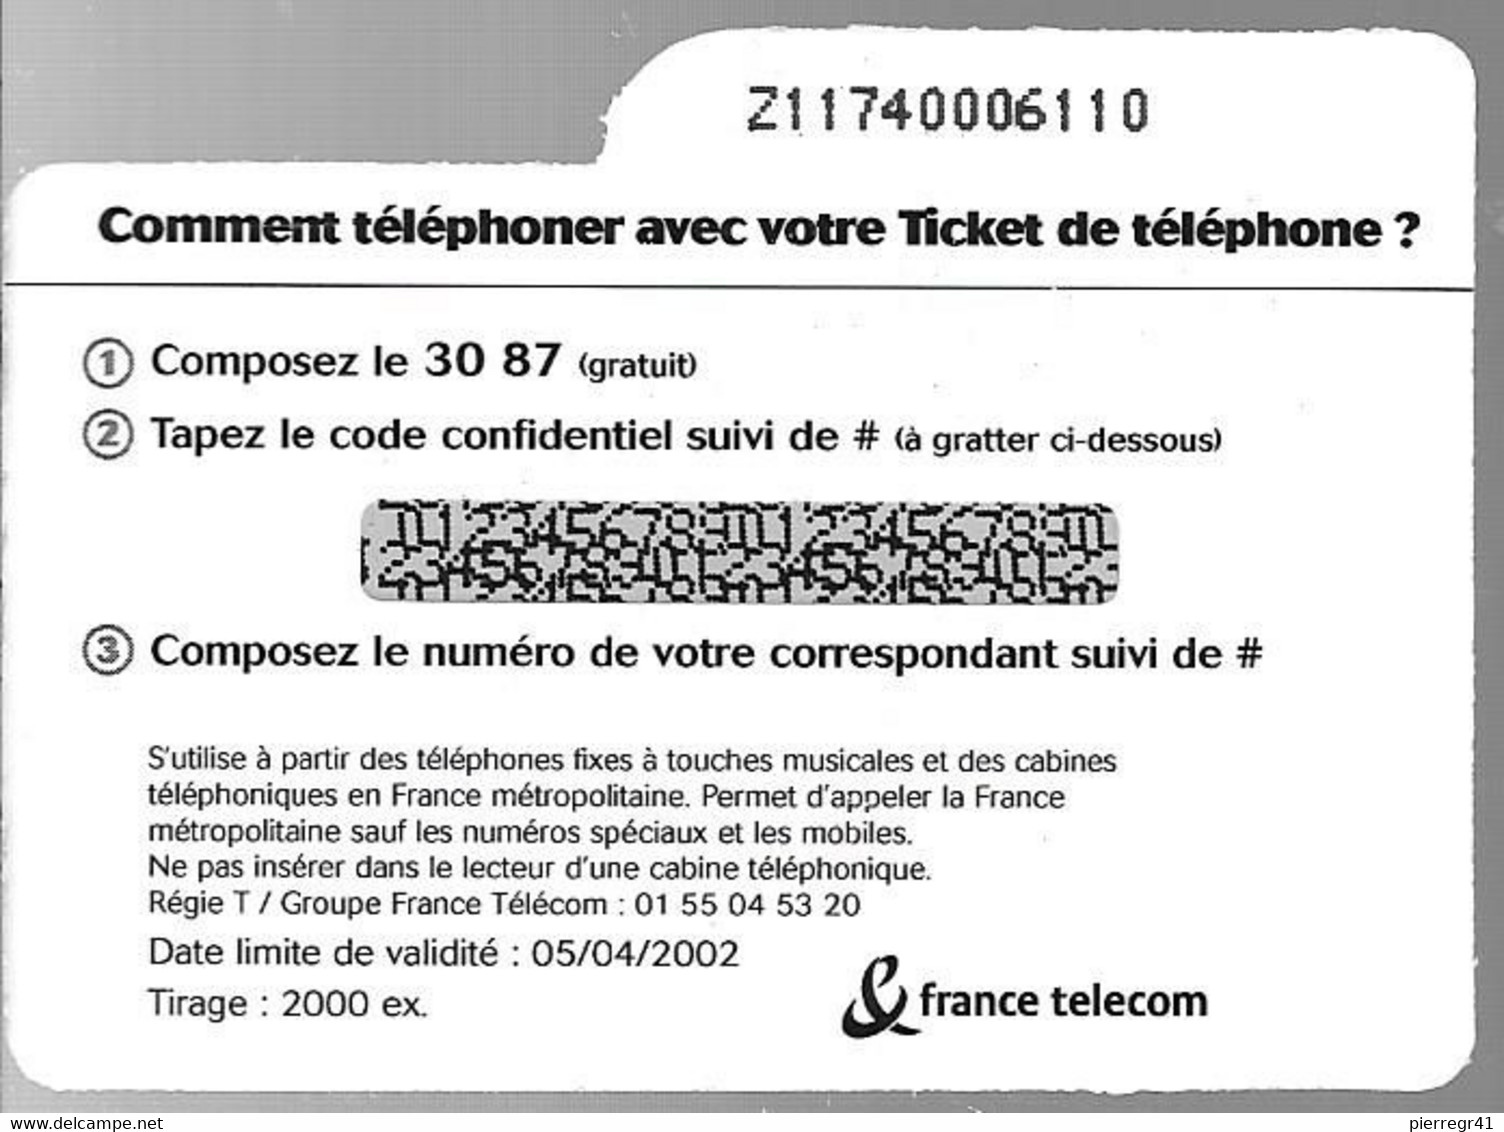 TICKET² TELEPHONE-PRIVE-FRANCE-TK-PR106-3Mn-La COTE En Poche-La Cinécarte-Atout Collect 4-Neuf-TBE/RARE - Billetes FT